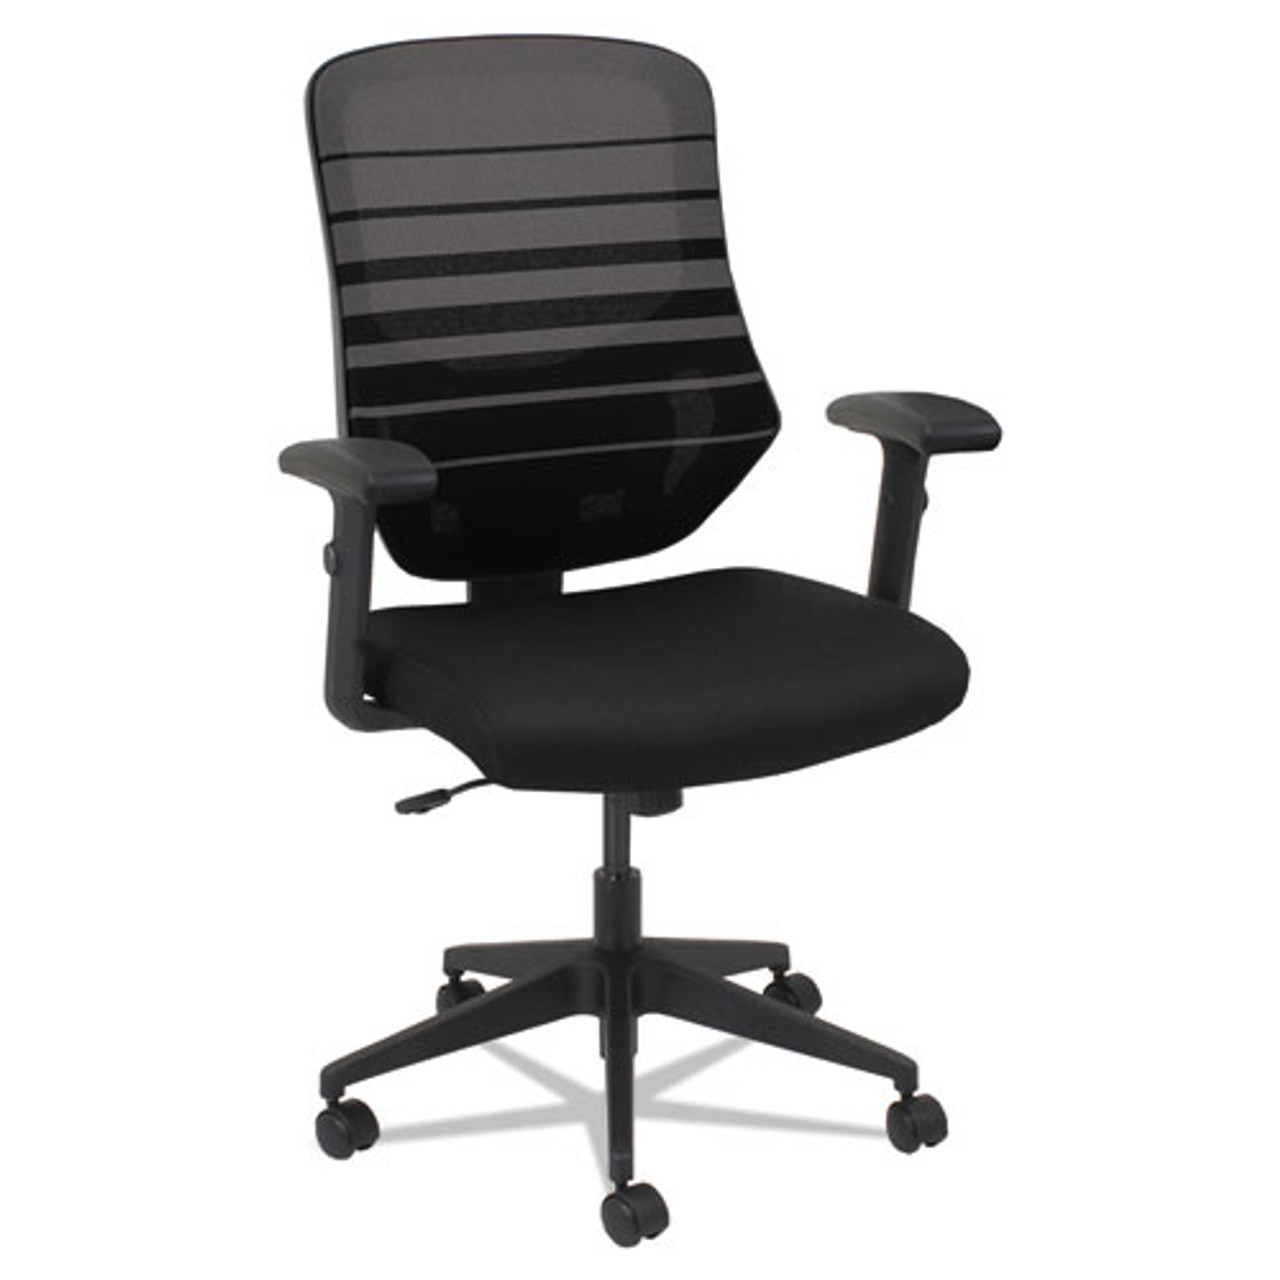 Alera Embre Series Mesh Mid-Back Chair, Black/taupe, #AL-1100